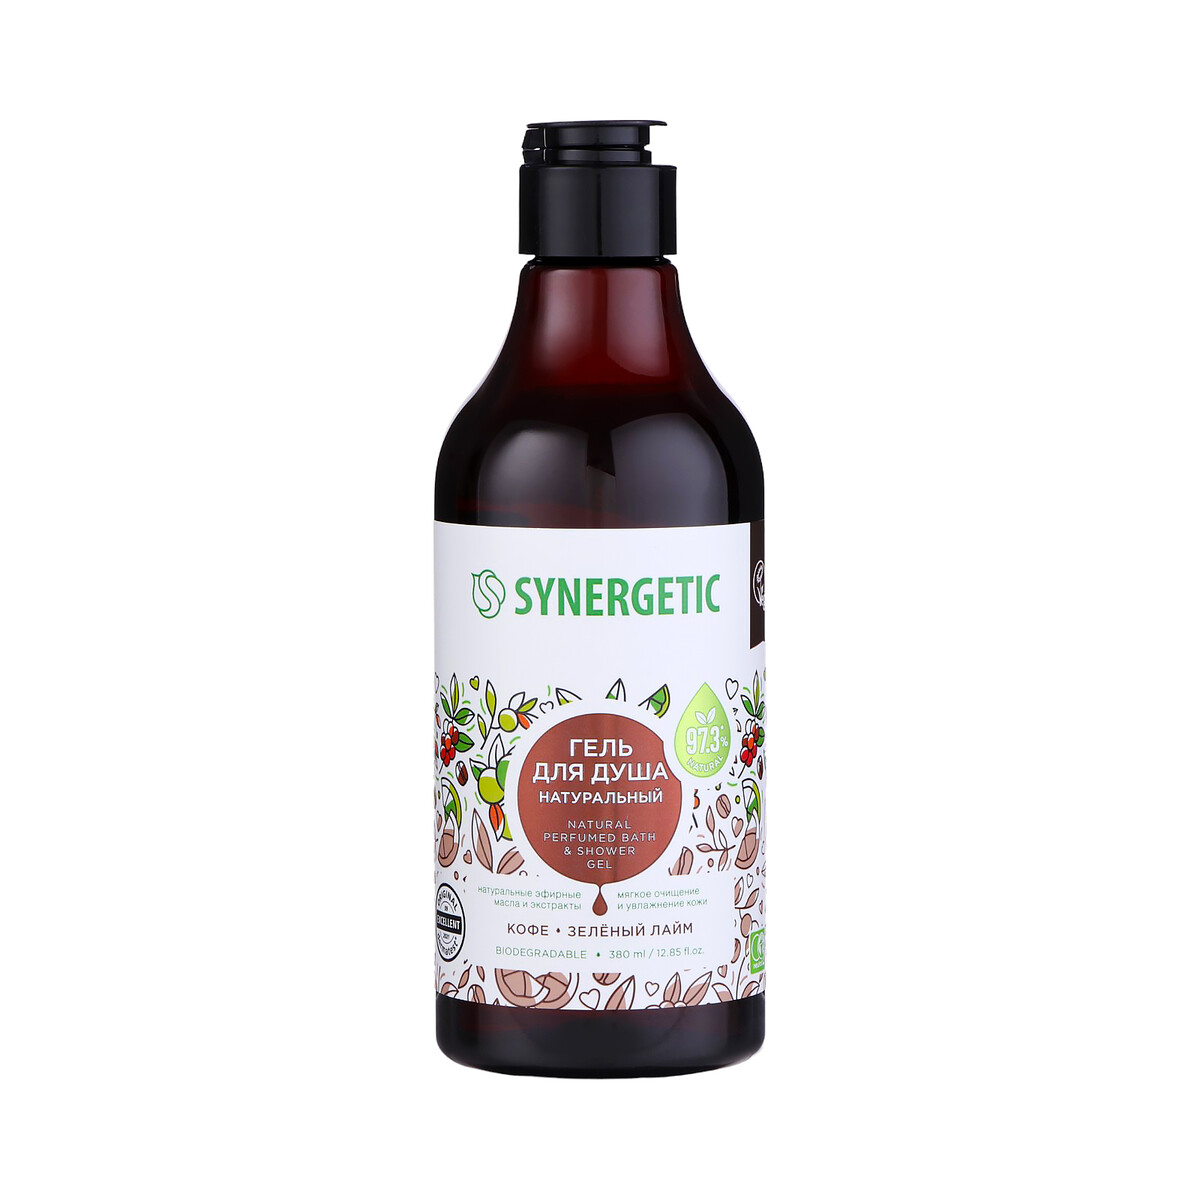 Натуральный биоразлагаемый гель для душа synergetic кофе и зеленый лайм, 380 мл Synergetic